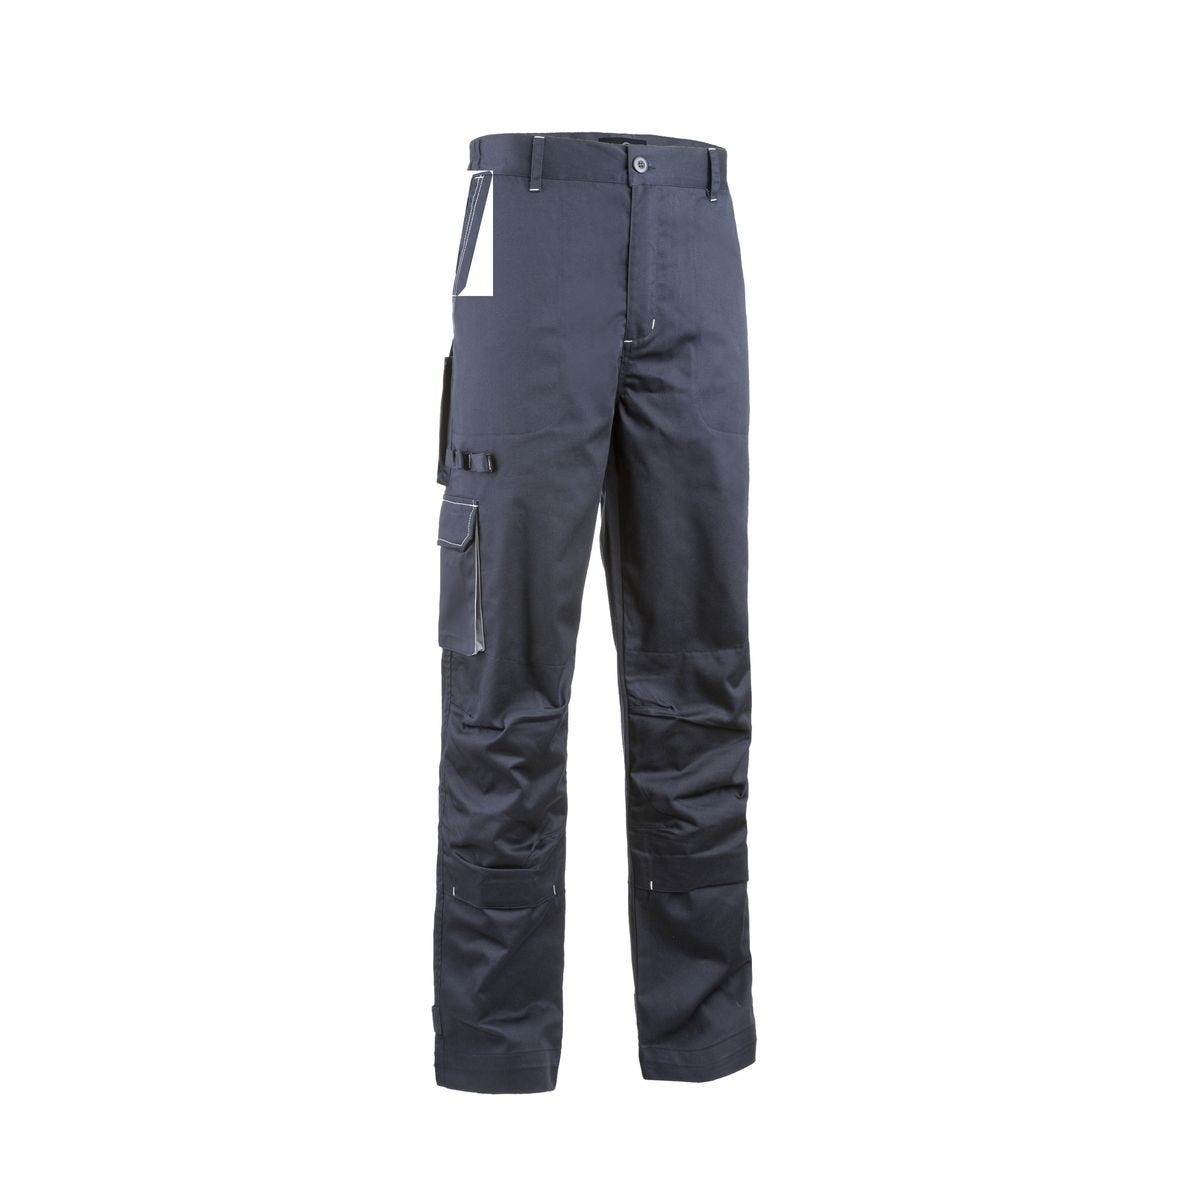 Pantalon NAVY II marine/gris - COVERGUARD - Taille 5XL 0